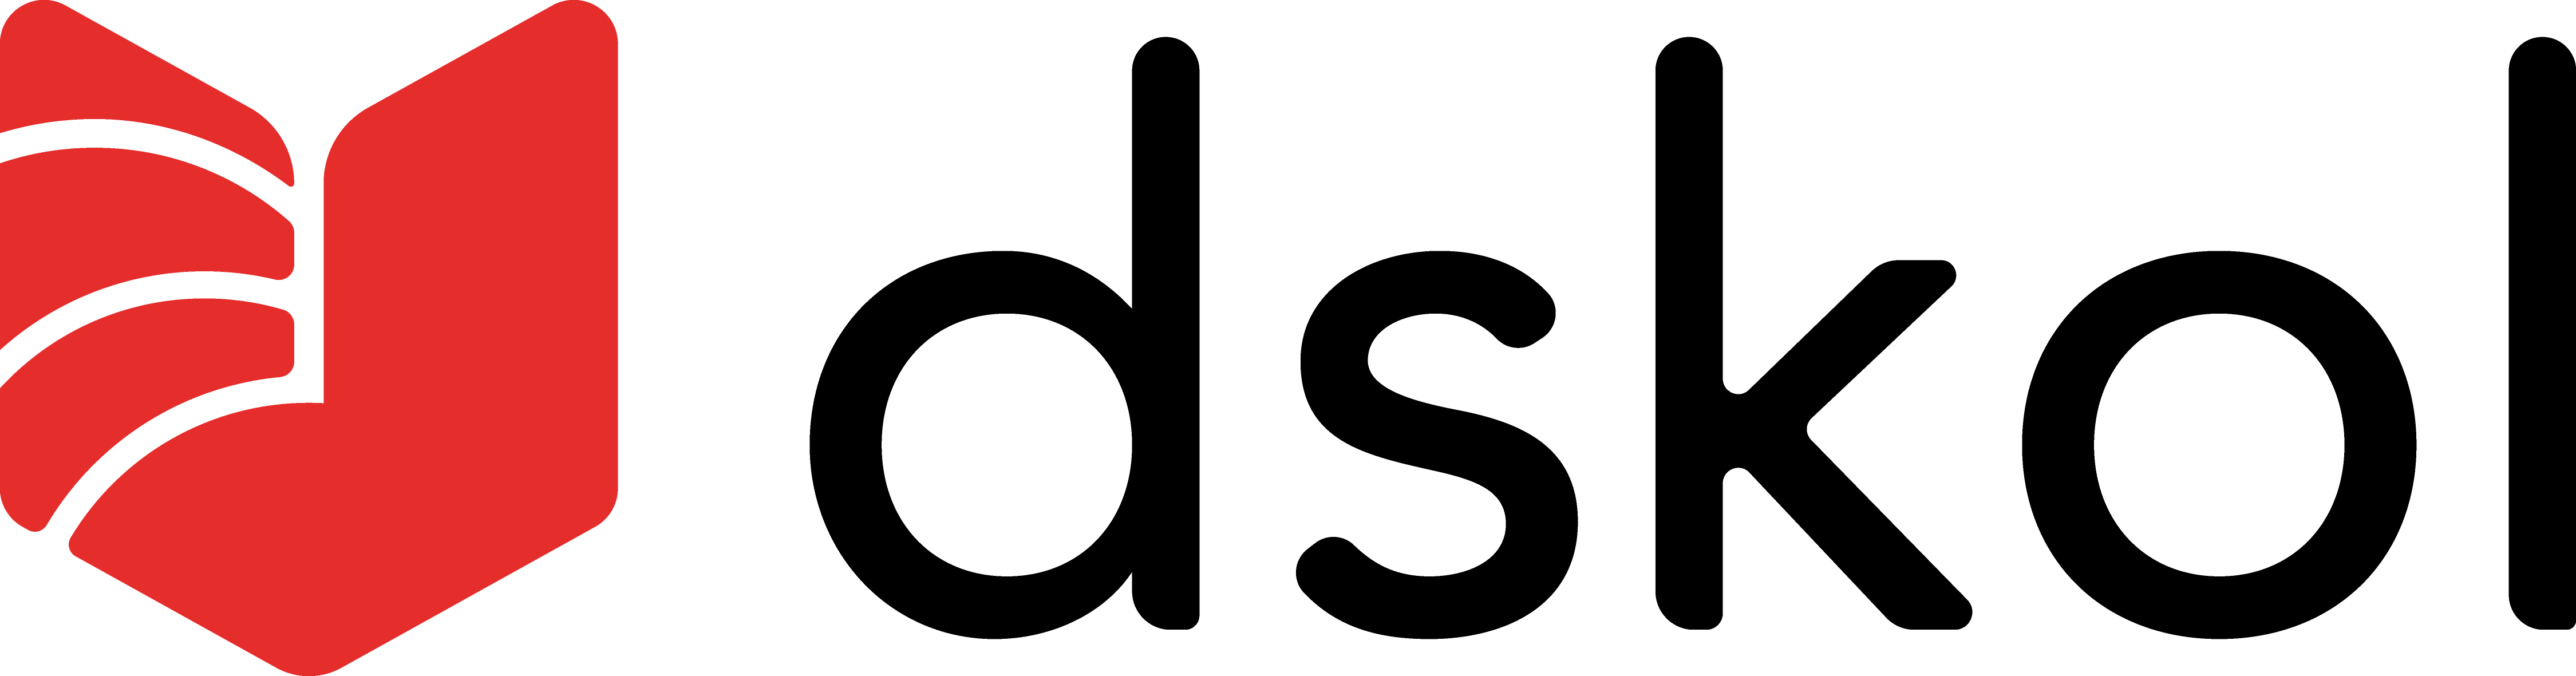 Dskol logo